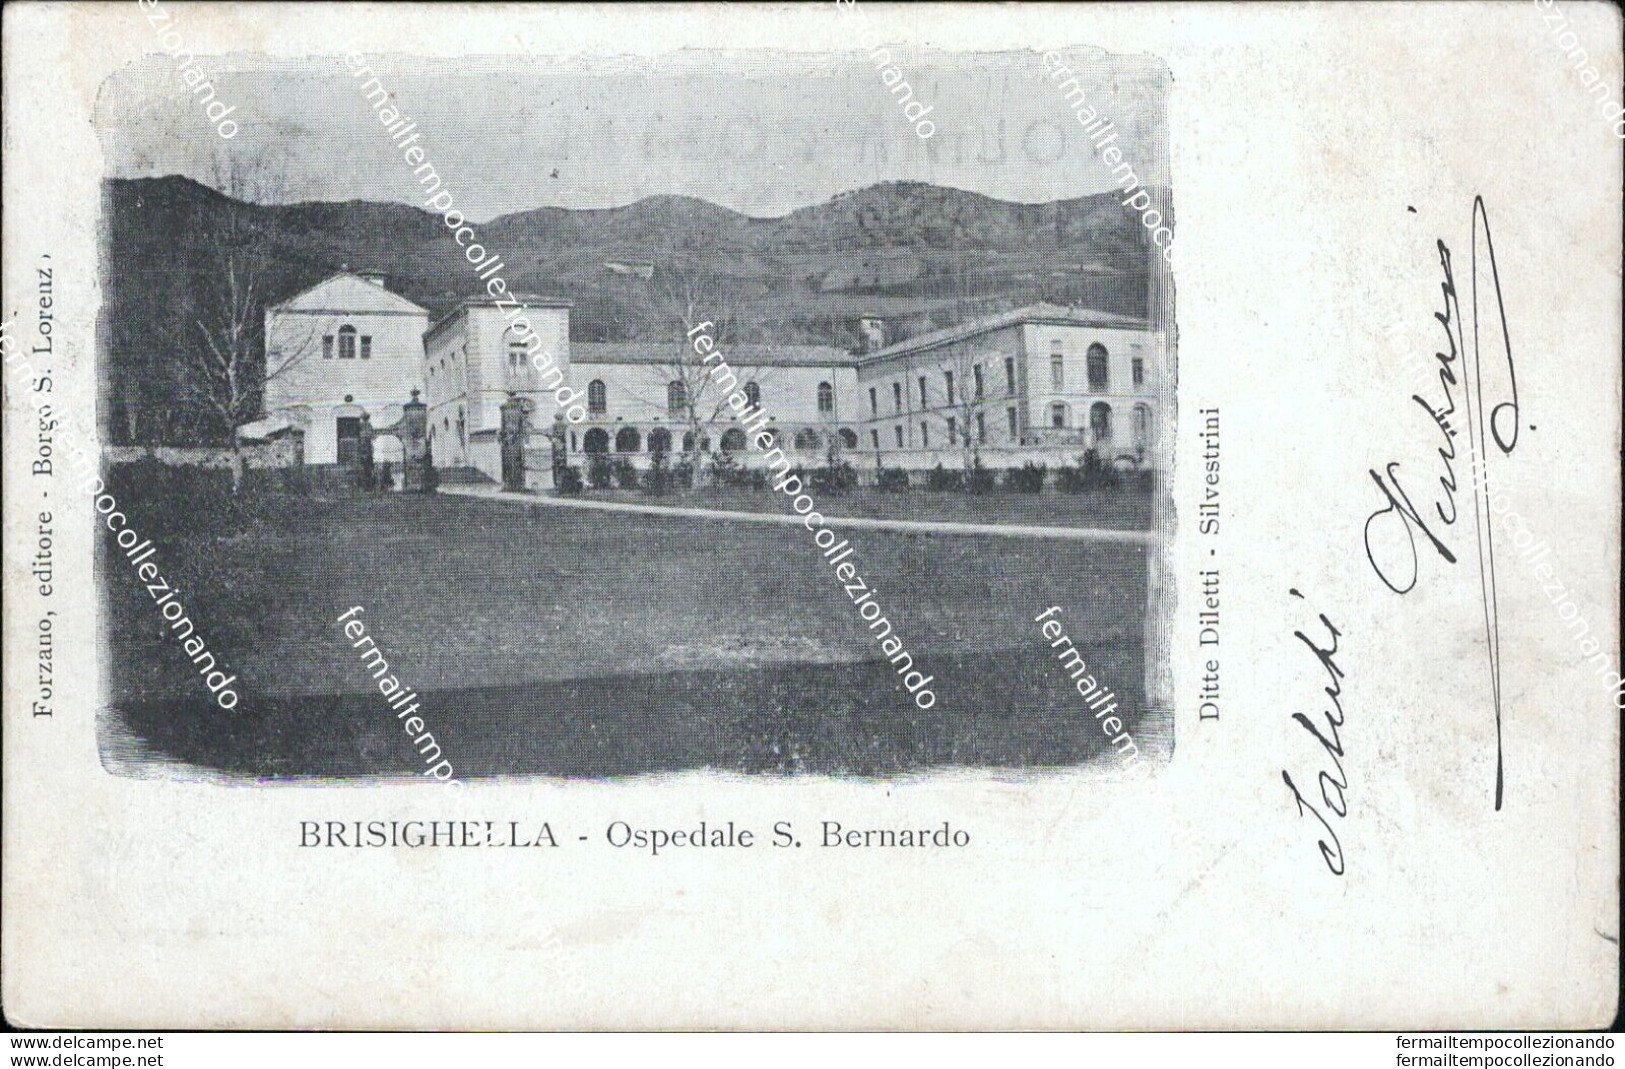 Az285 Cartolina Brisighella Ospedale S.bernardo Ravenna Emilia Romagna 1905 - Ravenna